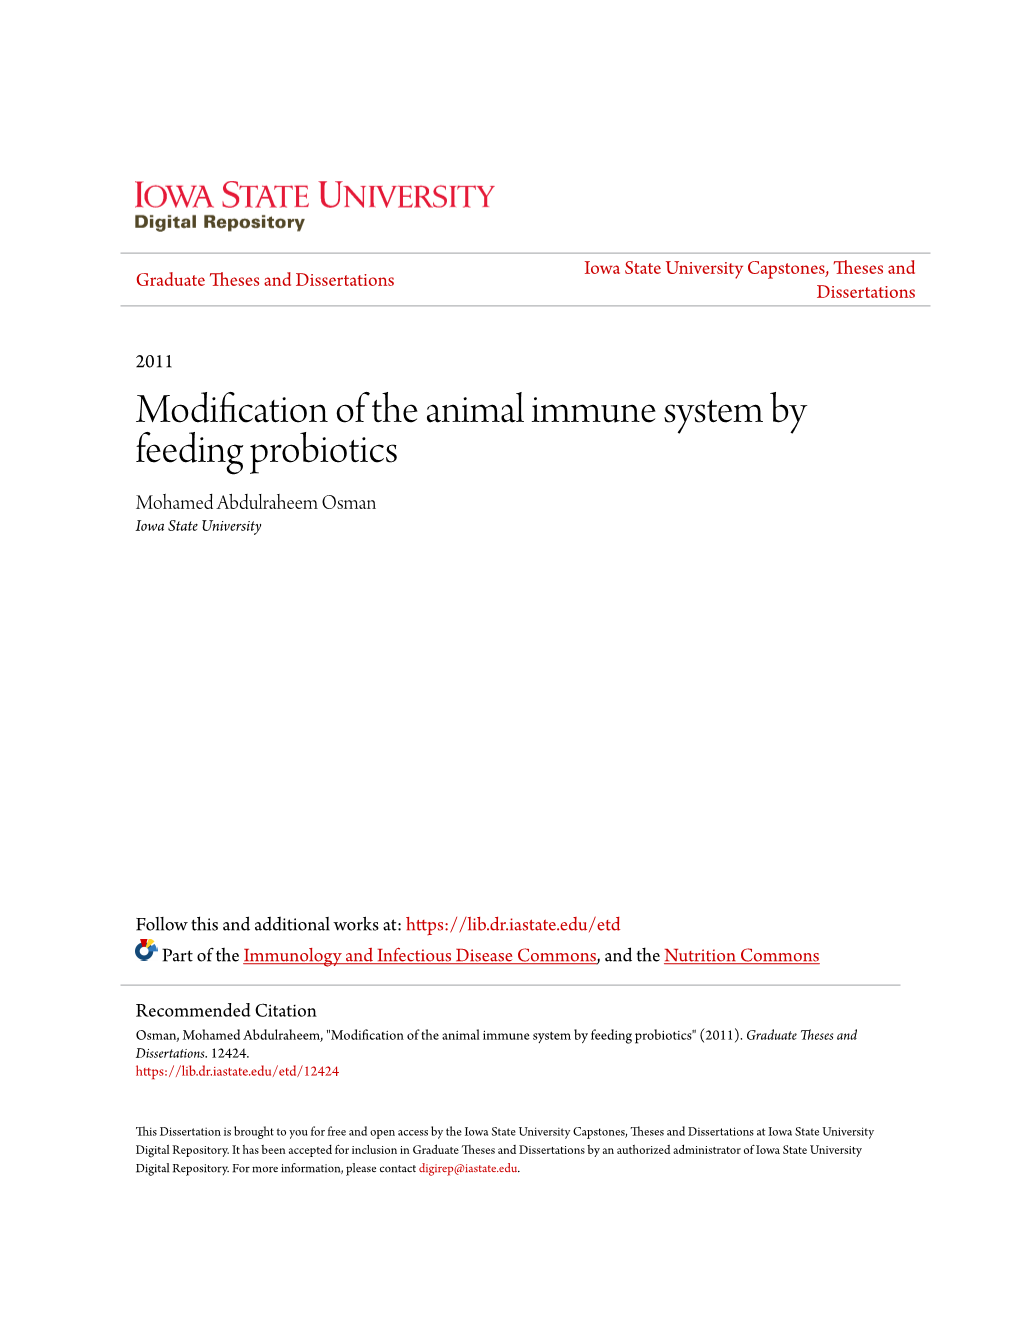 Modification of the Animal Immune System by Feeding Probiotics Mohamed Abdulraheem Osman Iowa State University